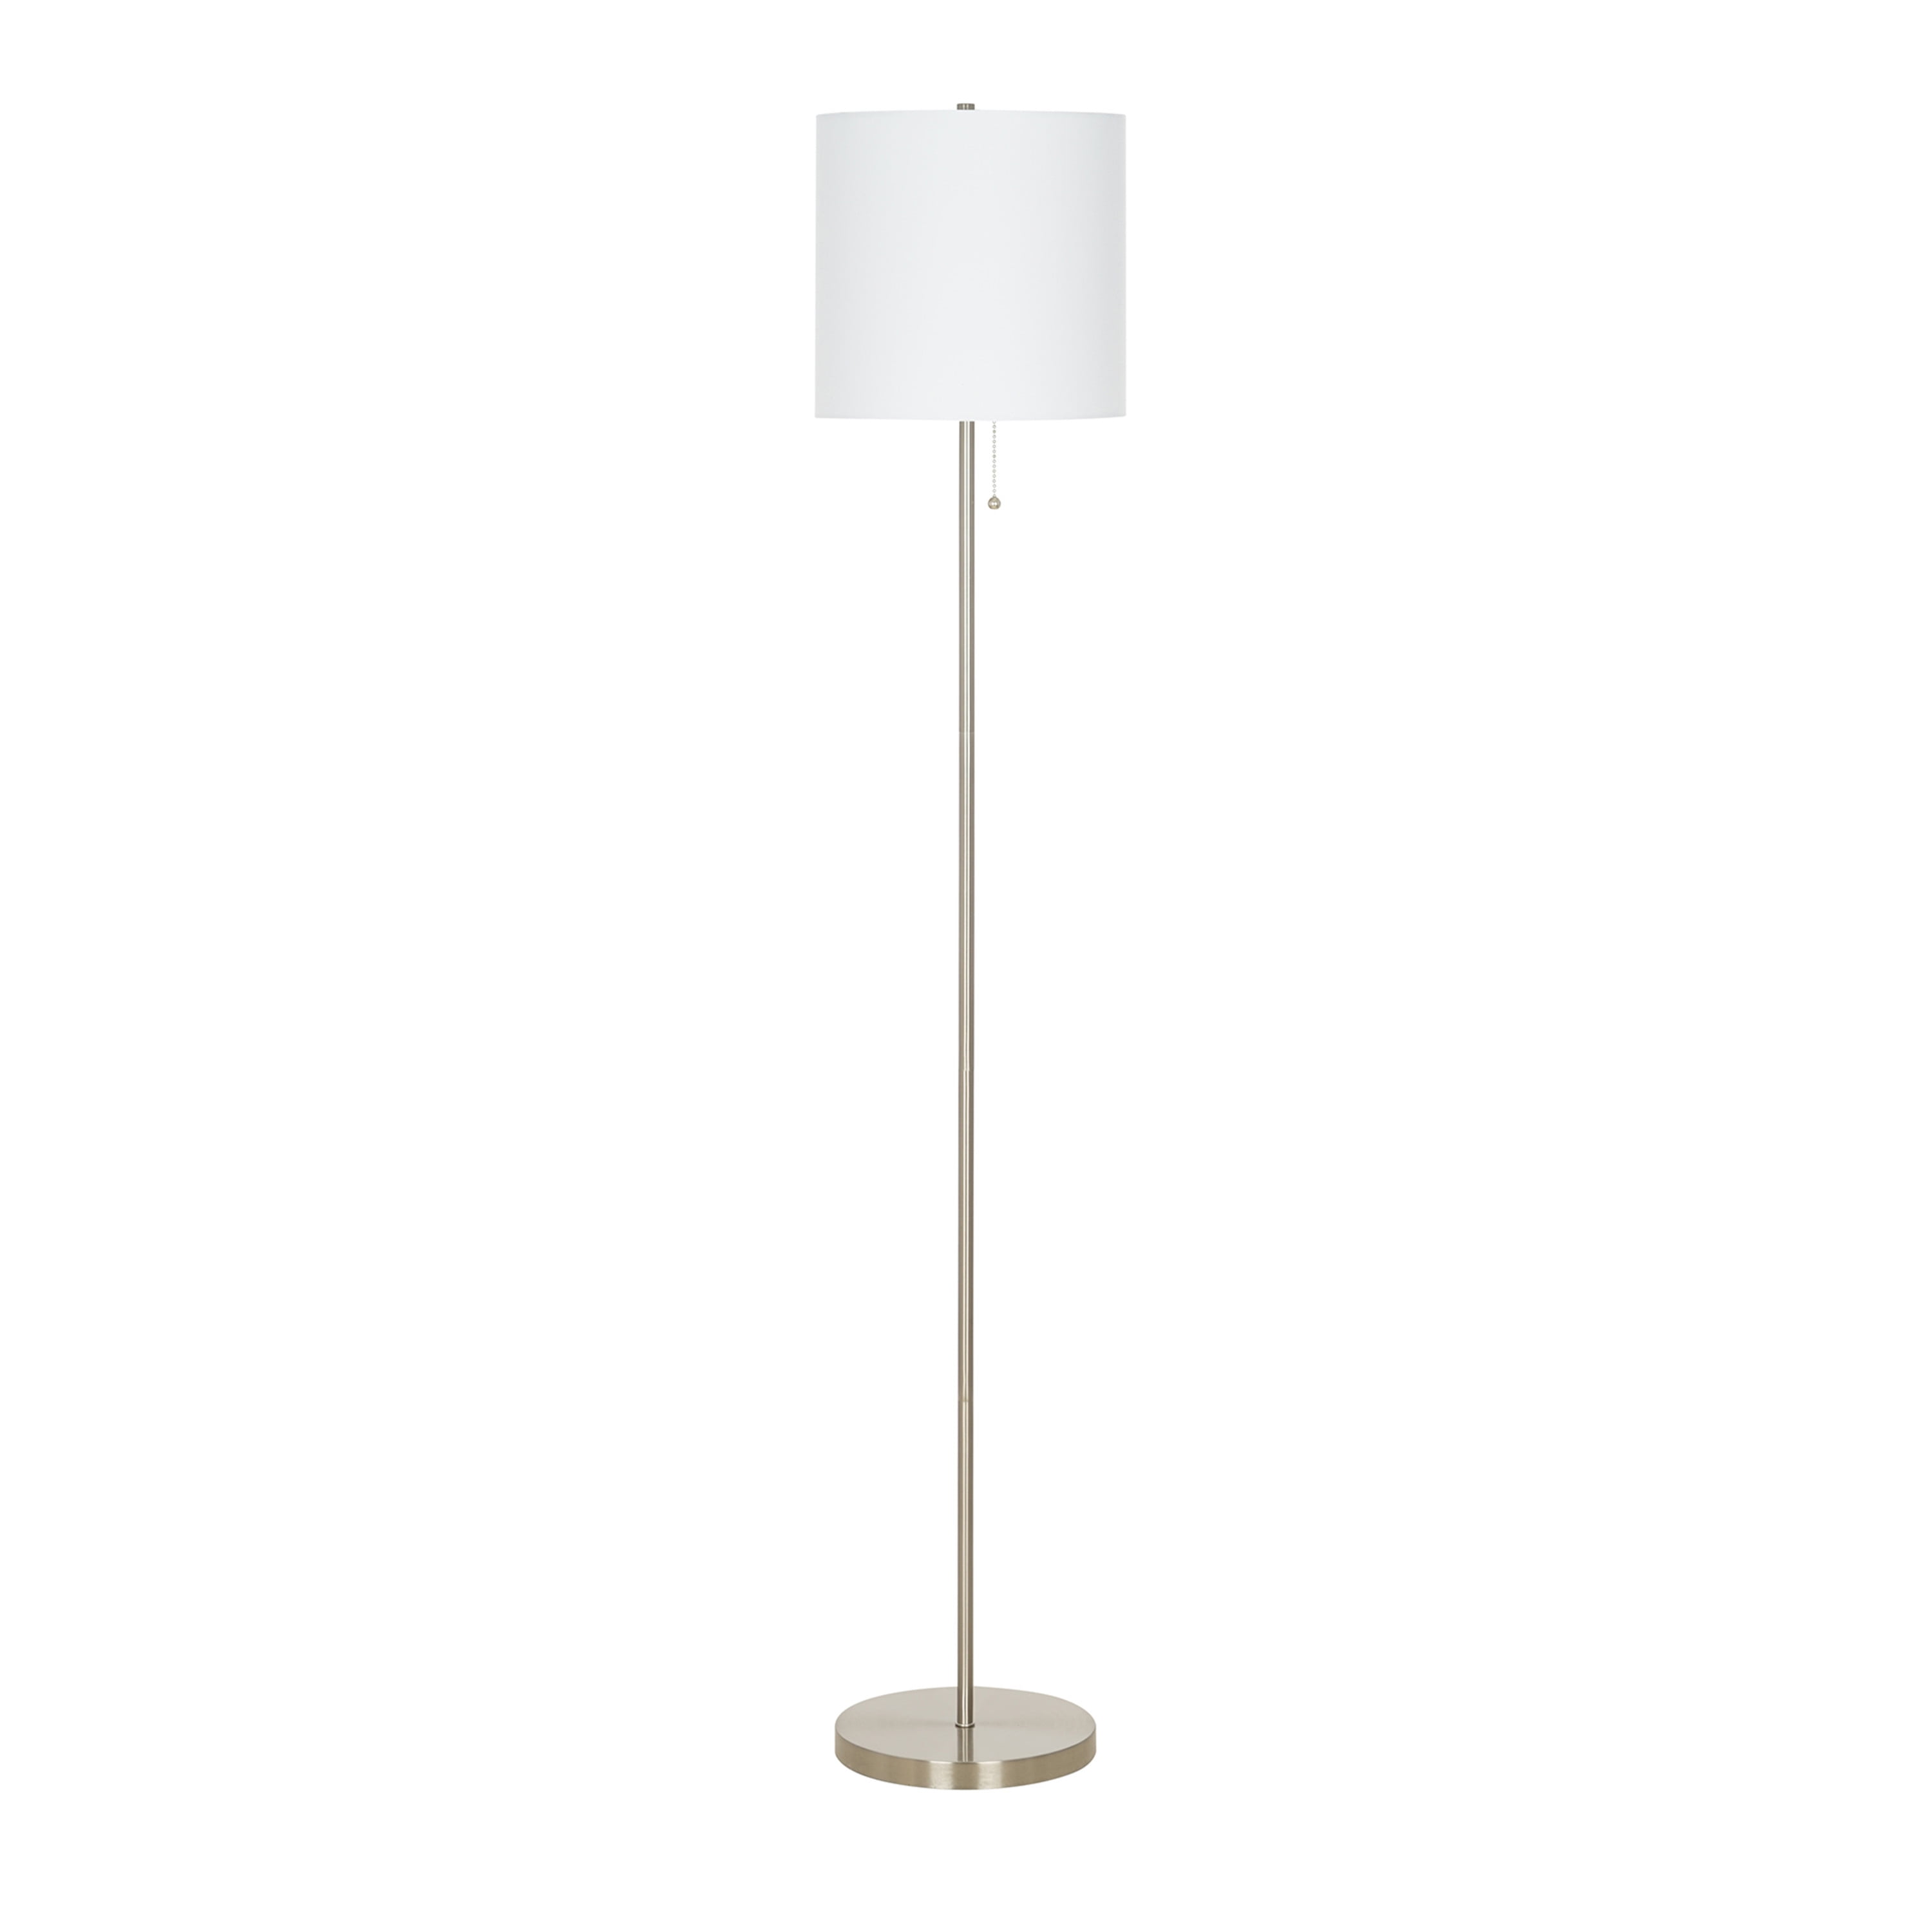 60 in Brushed Nickel Floor Lamp  Paper Shade Beige Decorative Lighting Faux Wood